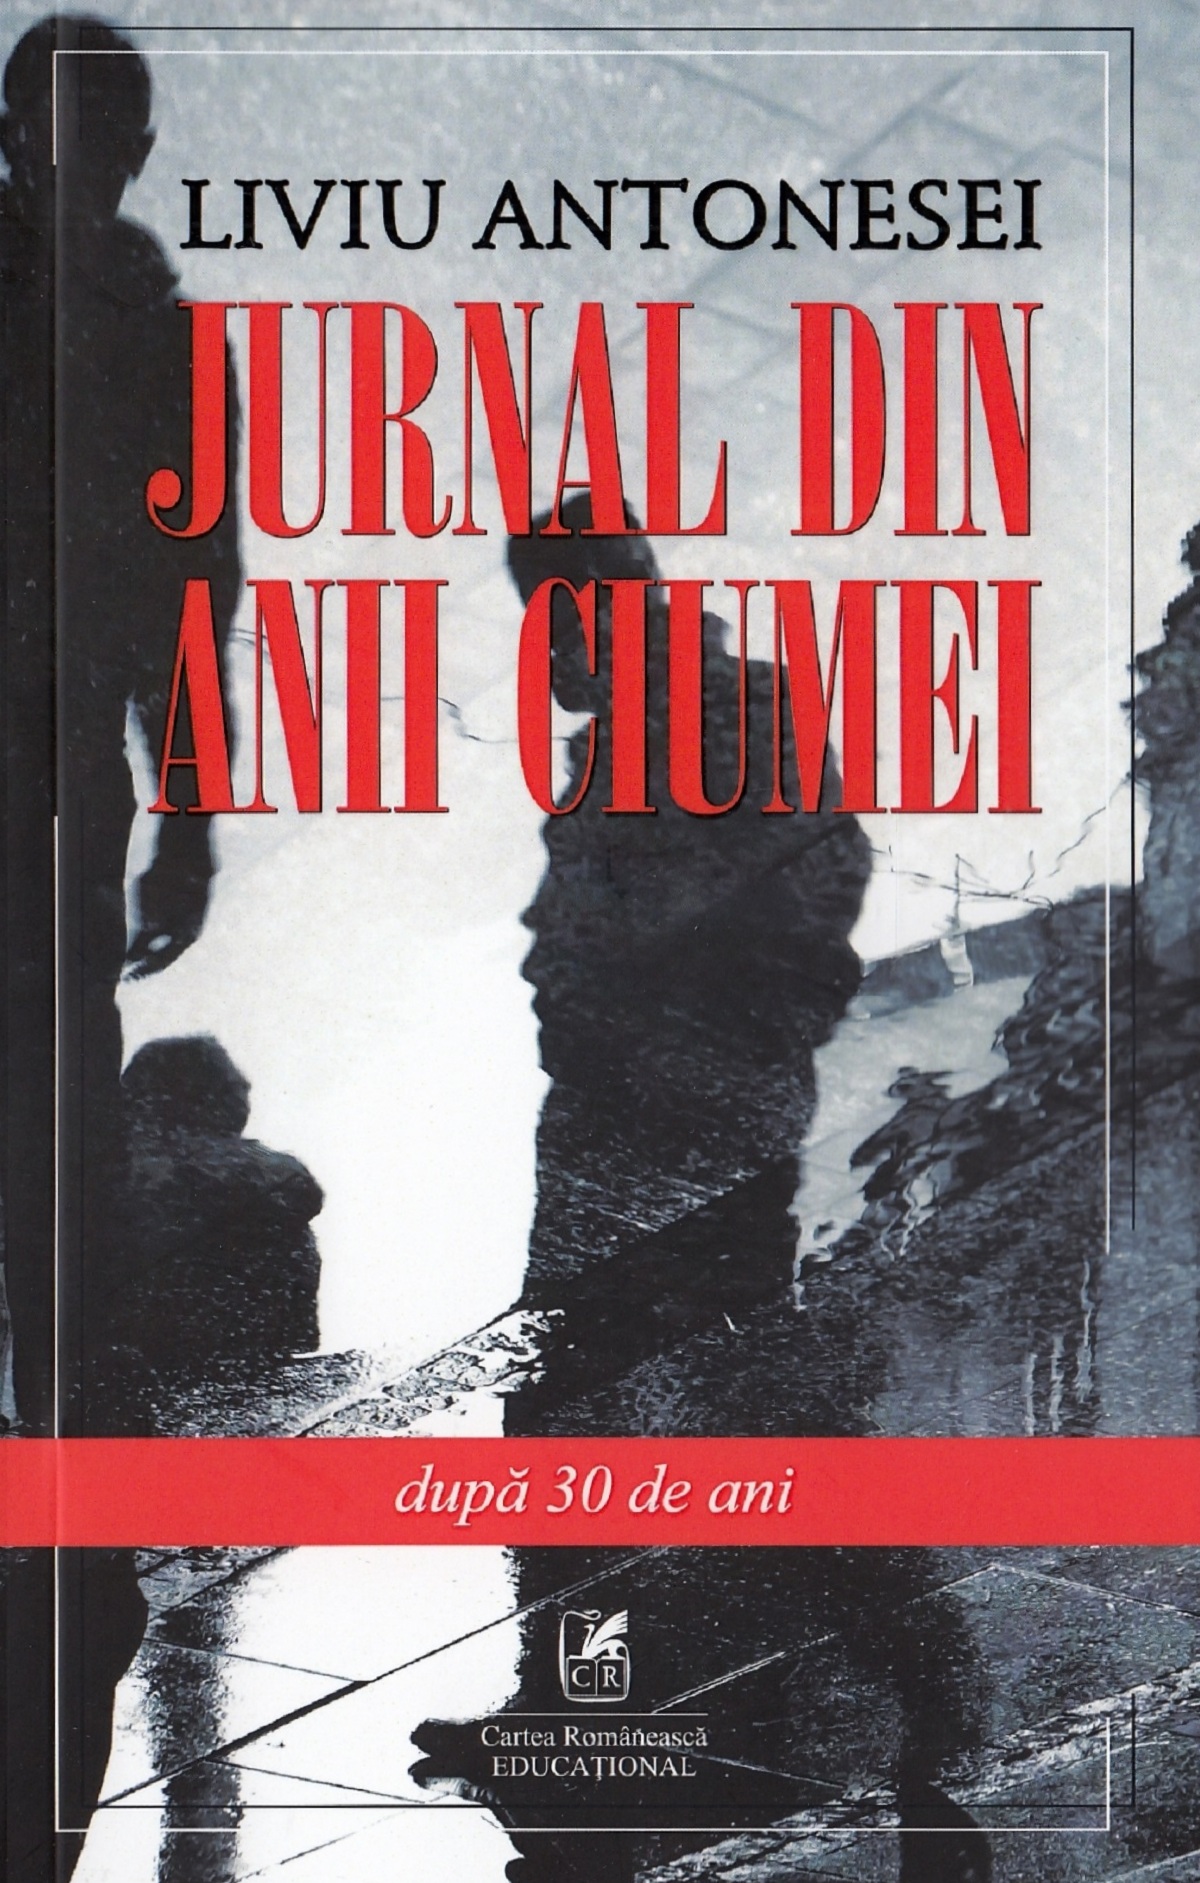 PDF Jurnal din anii ciumei | Liviu Antonesei Cartea Romaneasca educational Biografii, memorii, jurnale